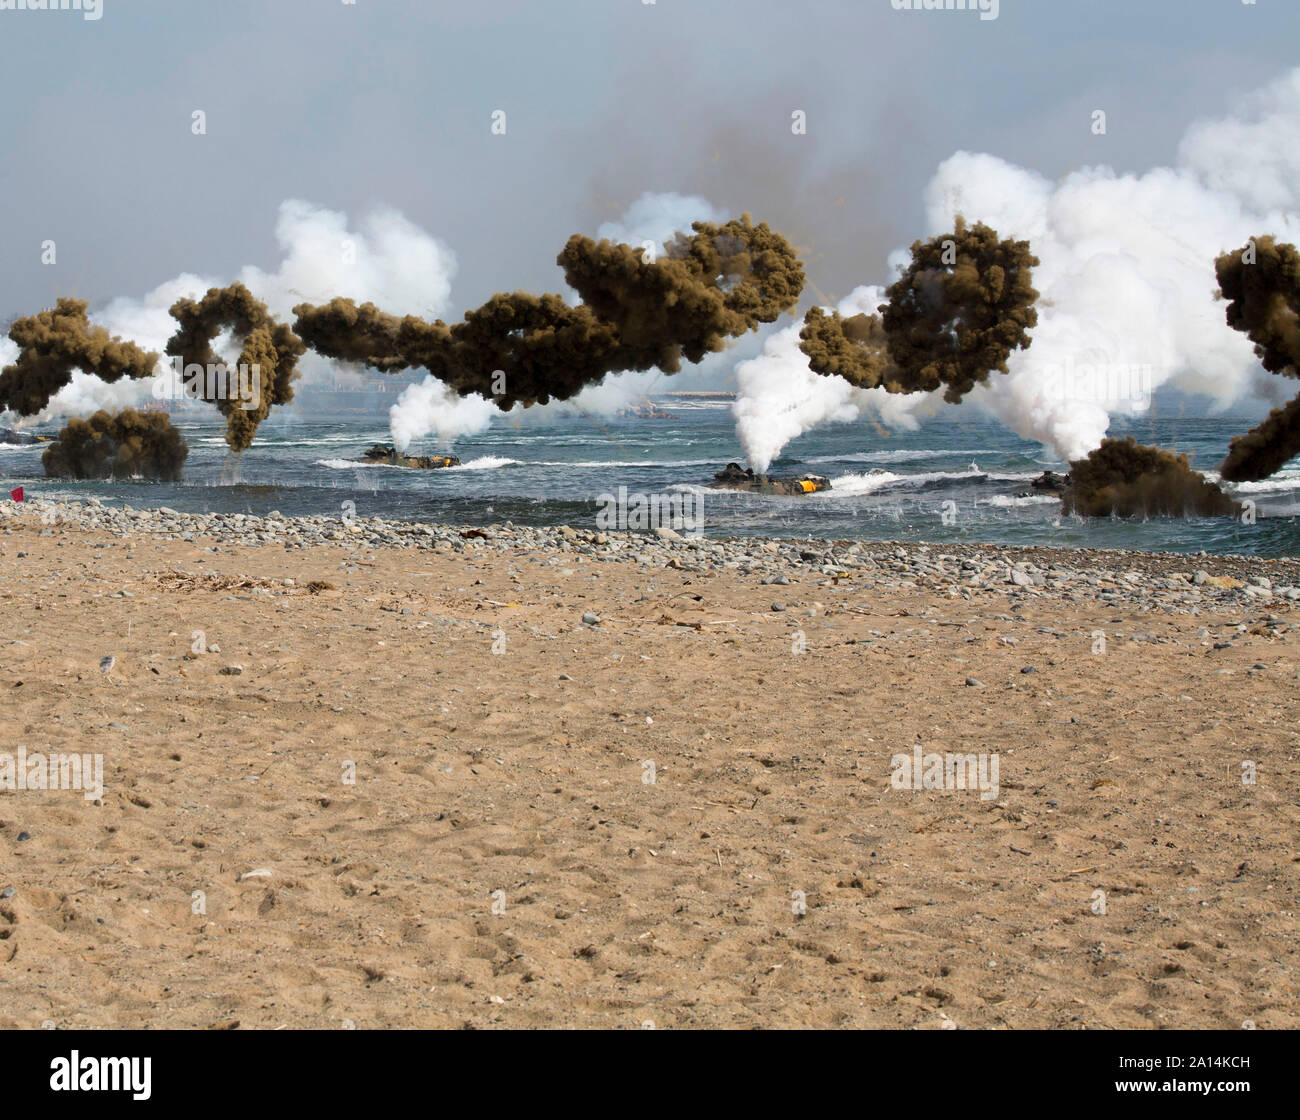 Republic of Korea and U.S. Marine amphibious assault vehicles deploy smokescreens. Stock Photo